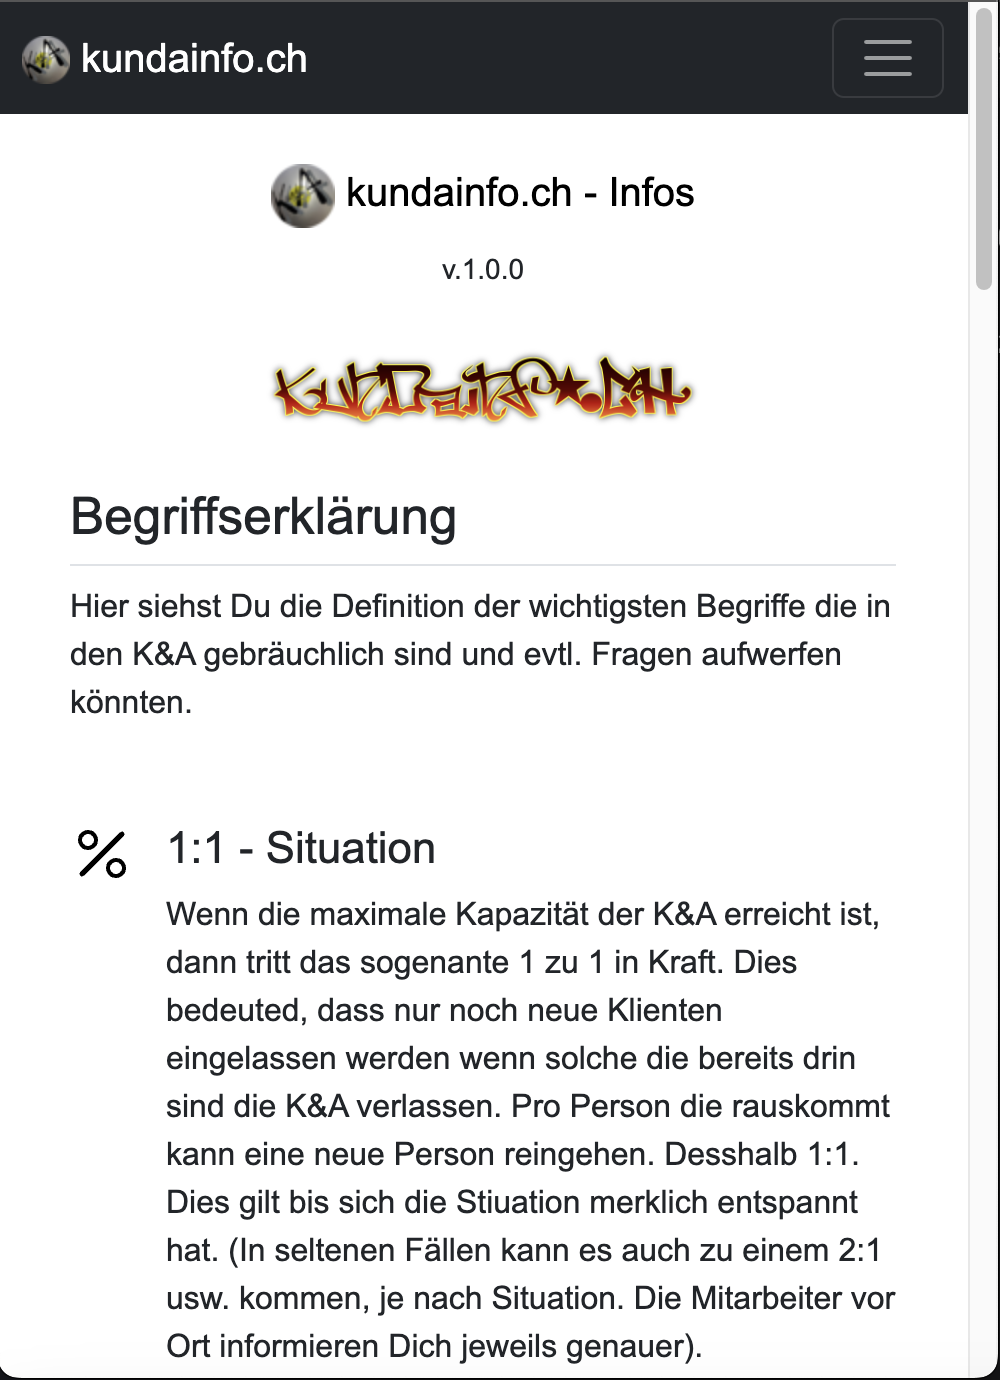 Creditspage of kundainfo.ch